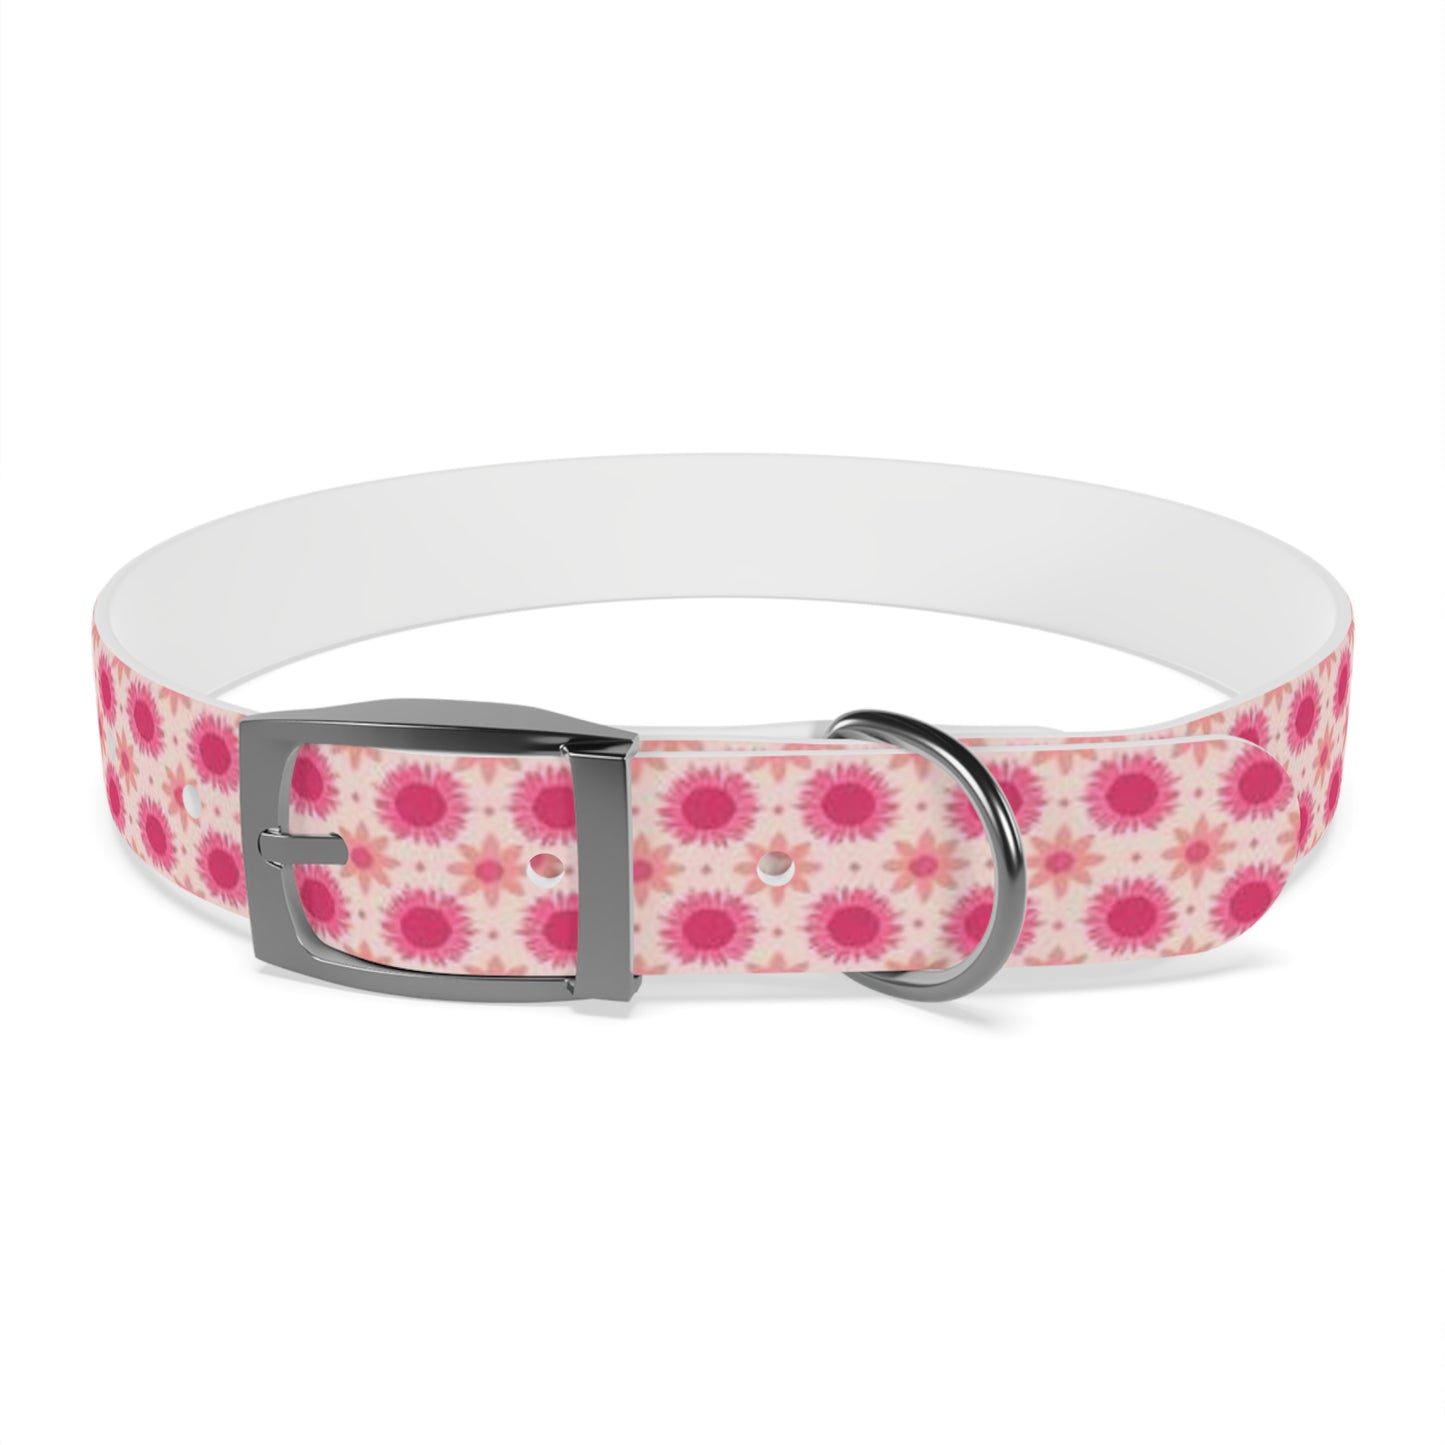 Retro Pink Sunflowers Dog Collar